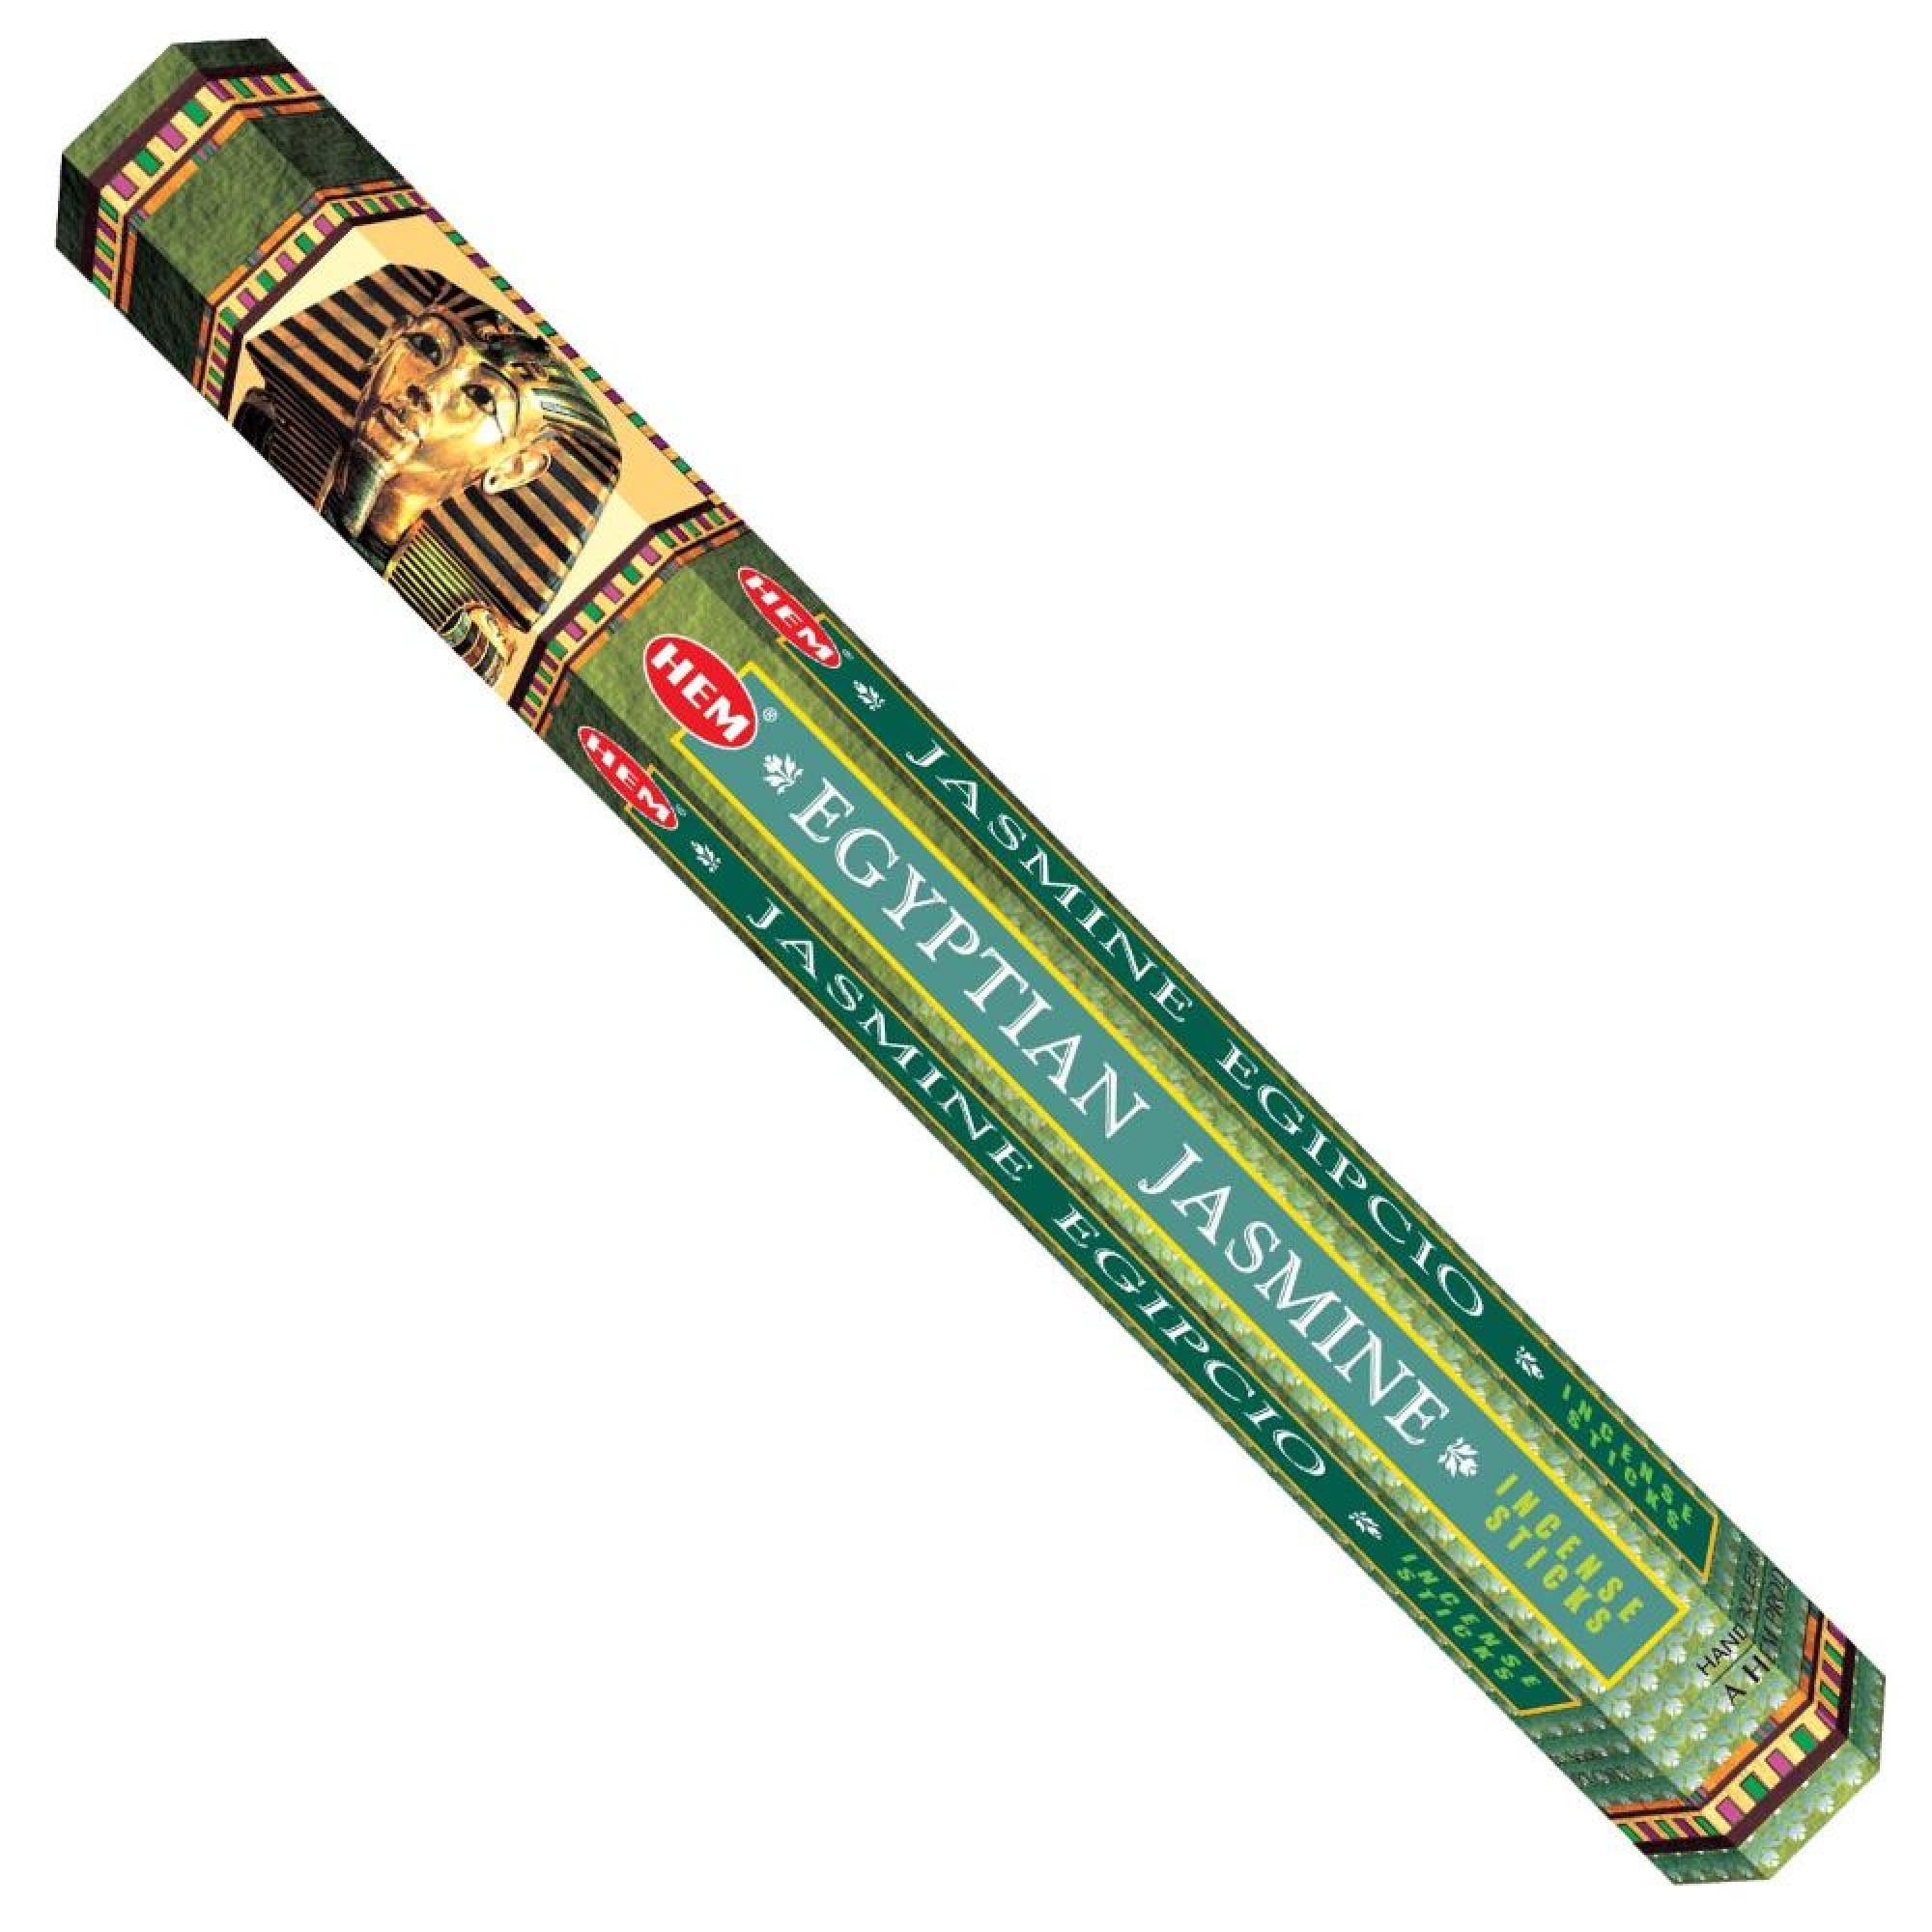 HEM - Hexagon - Egyptian Jasmine Incense Sticks